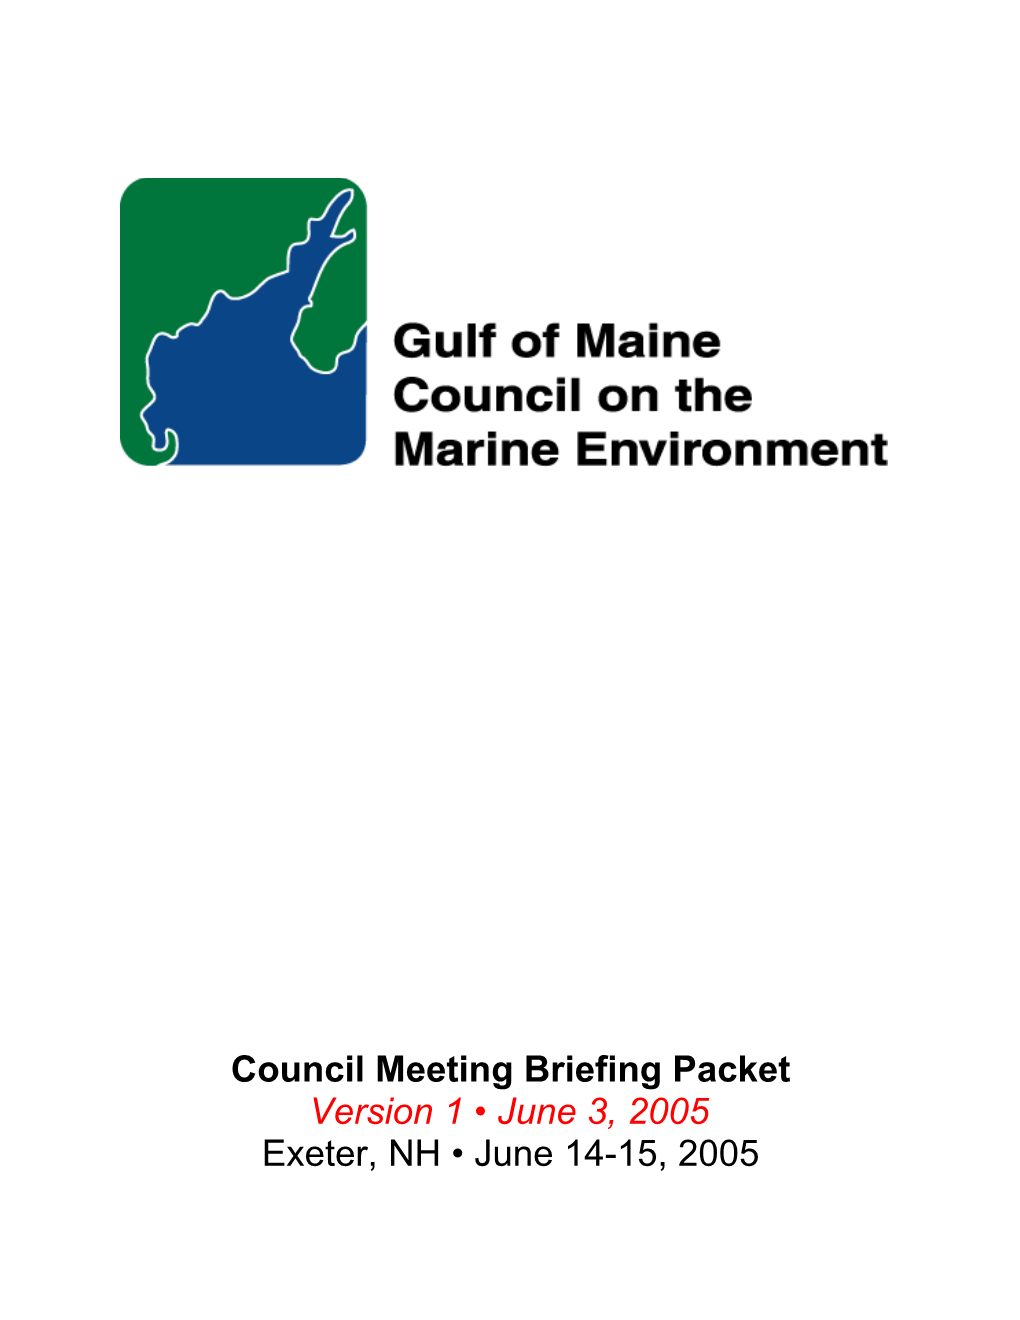 GOMC WG December 2004 Meeting Briefing Document